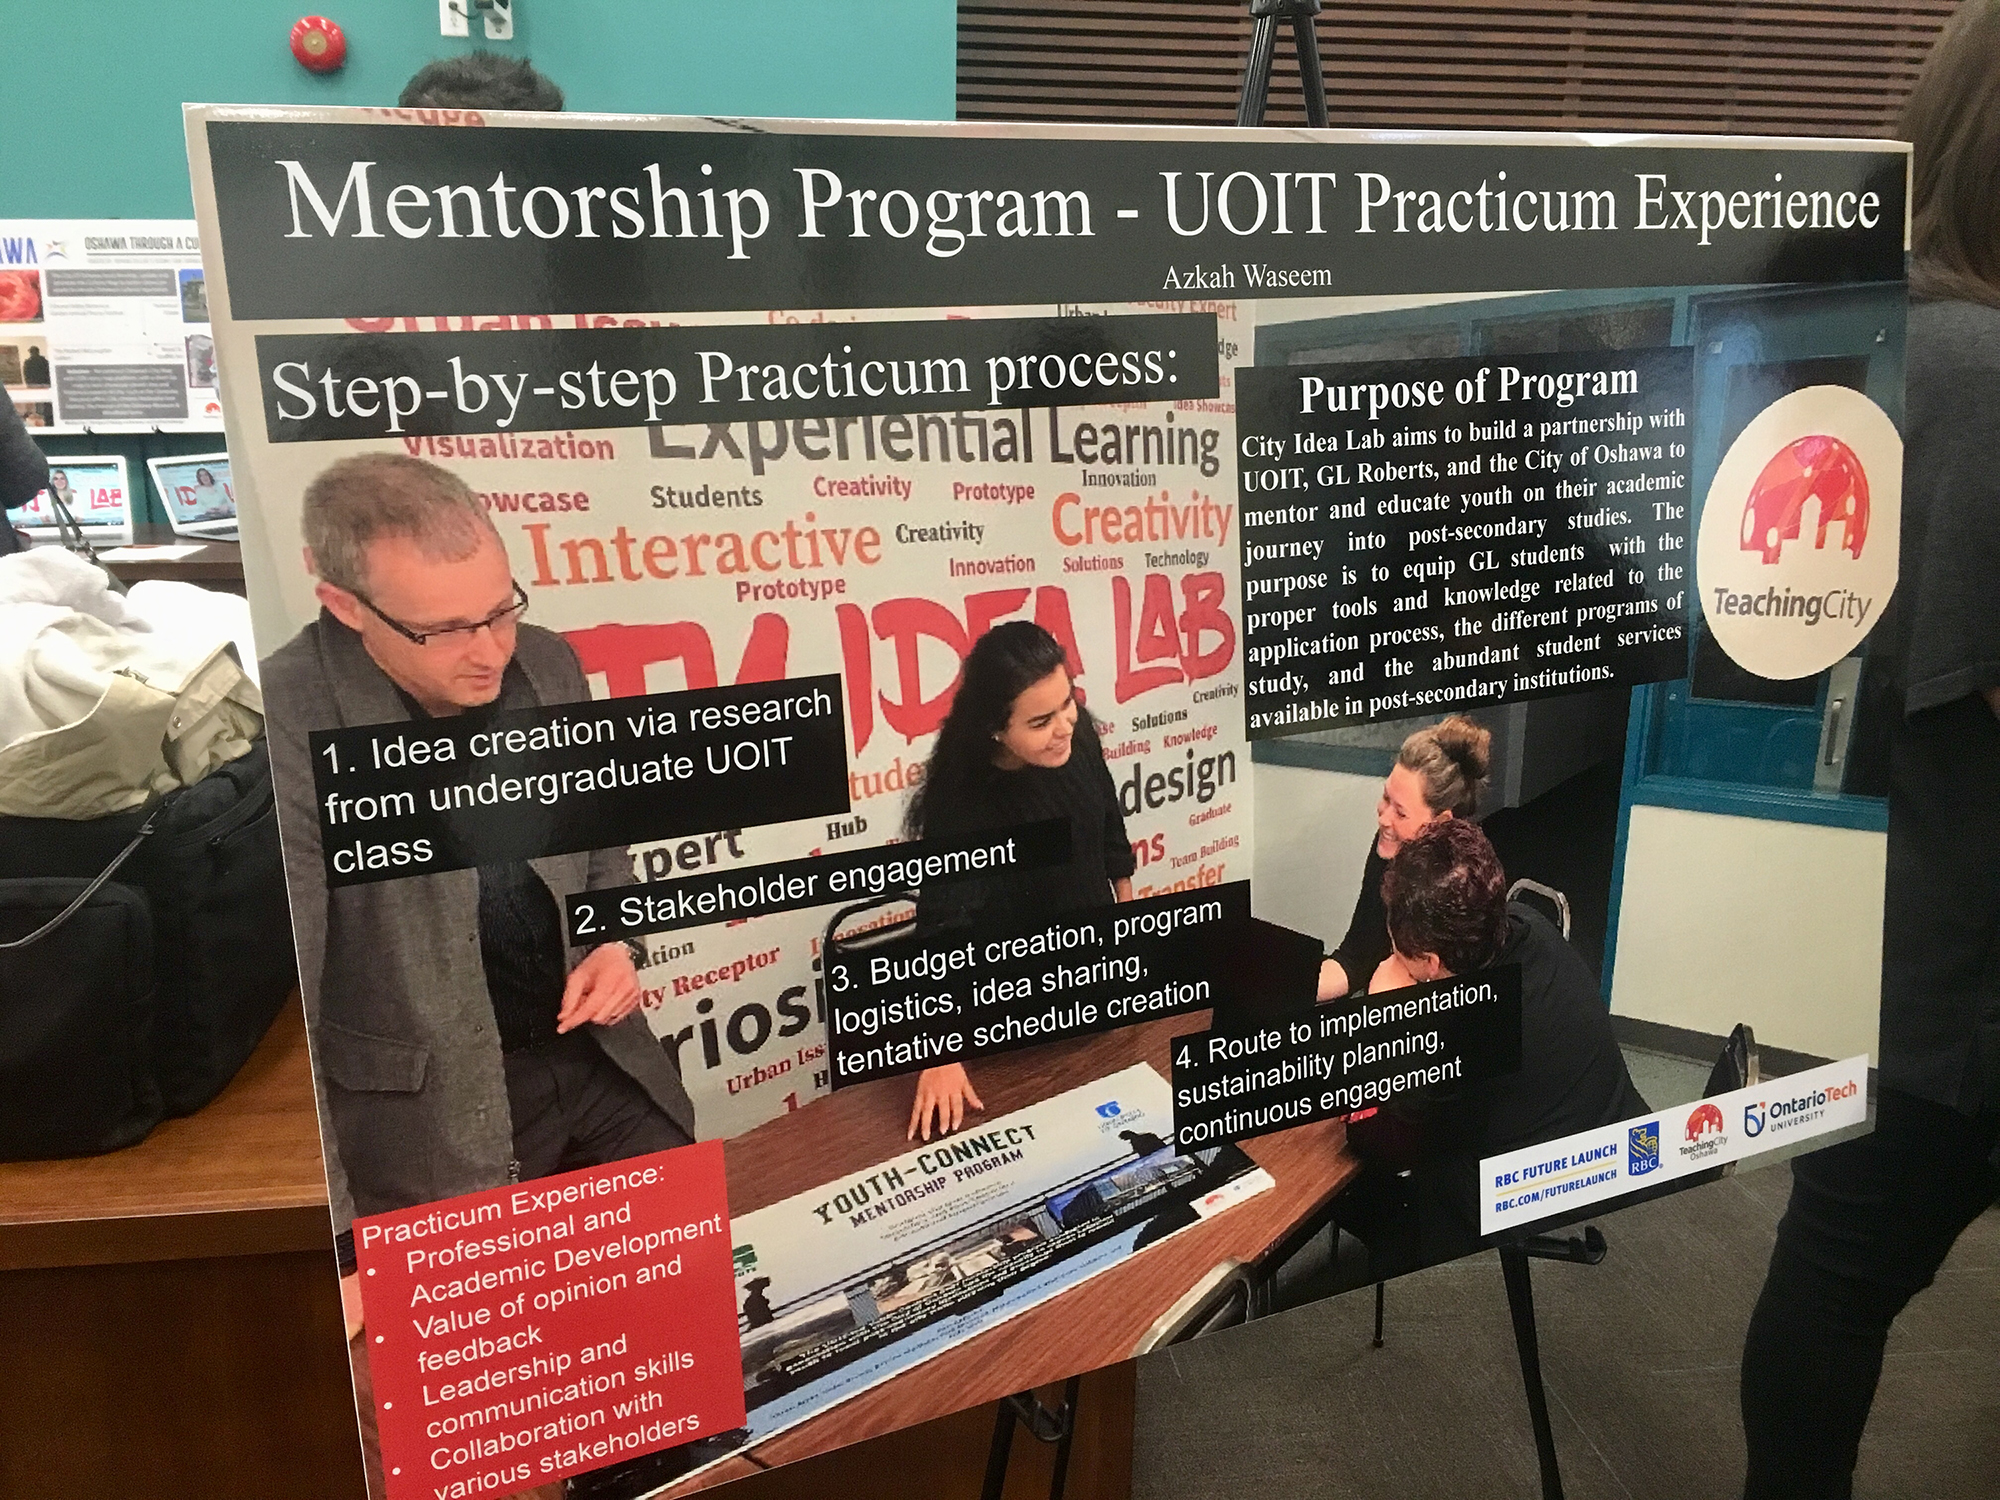 Mentorship program - Ontario Tech University Practicum Experience